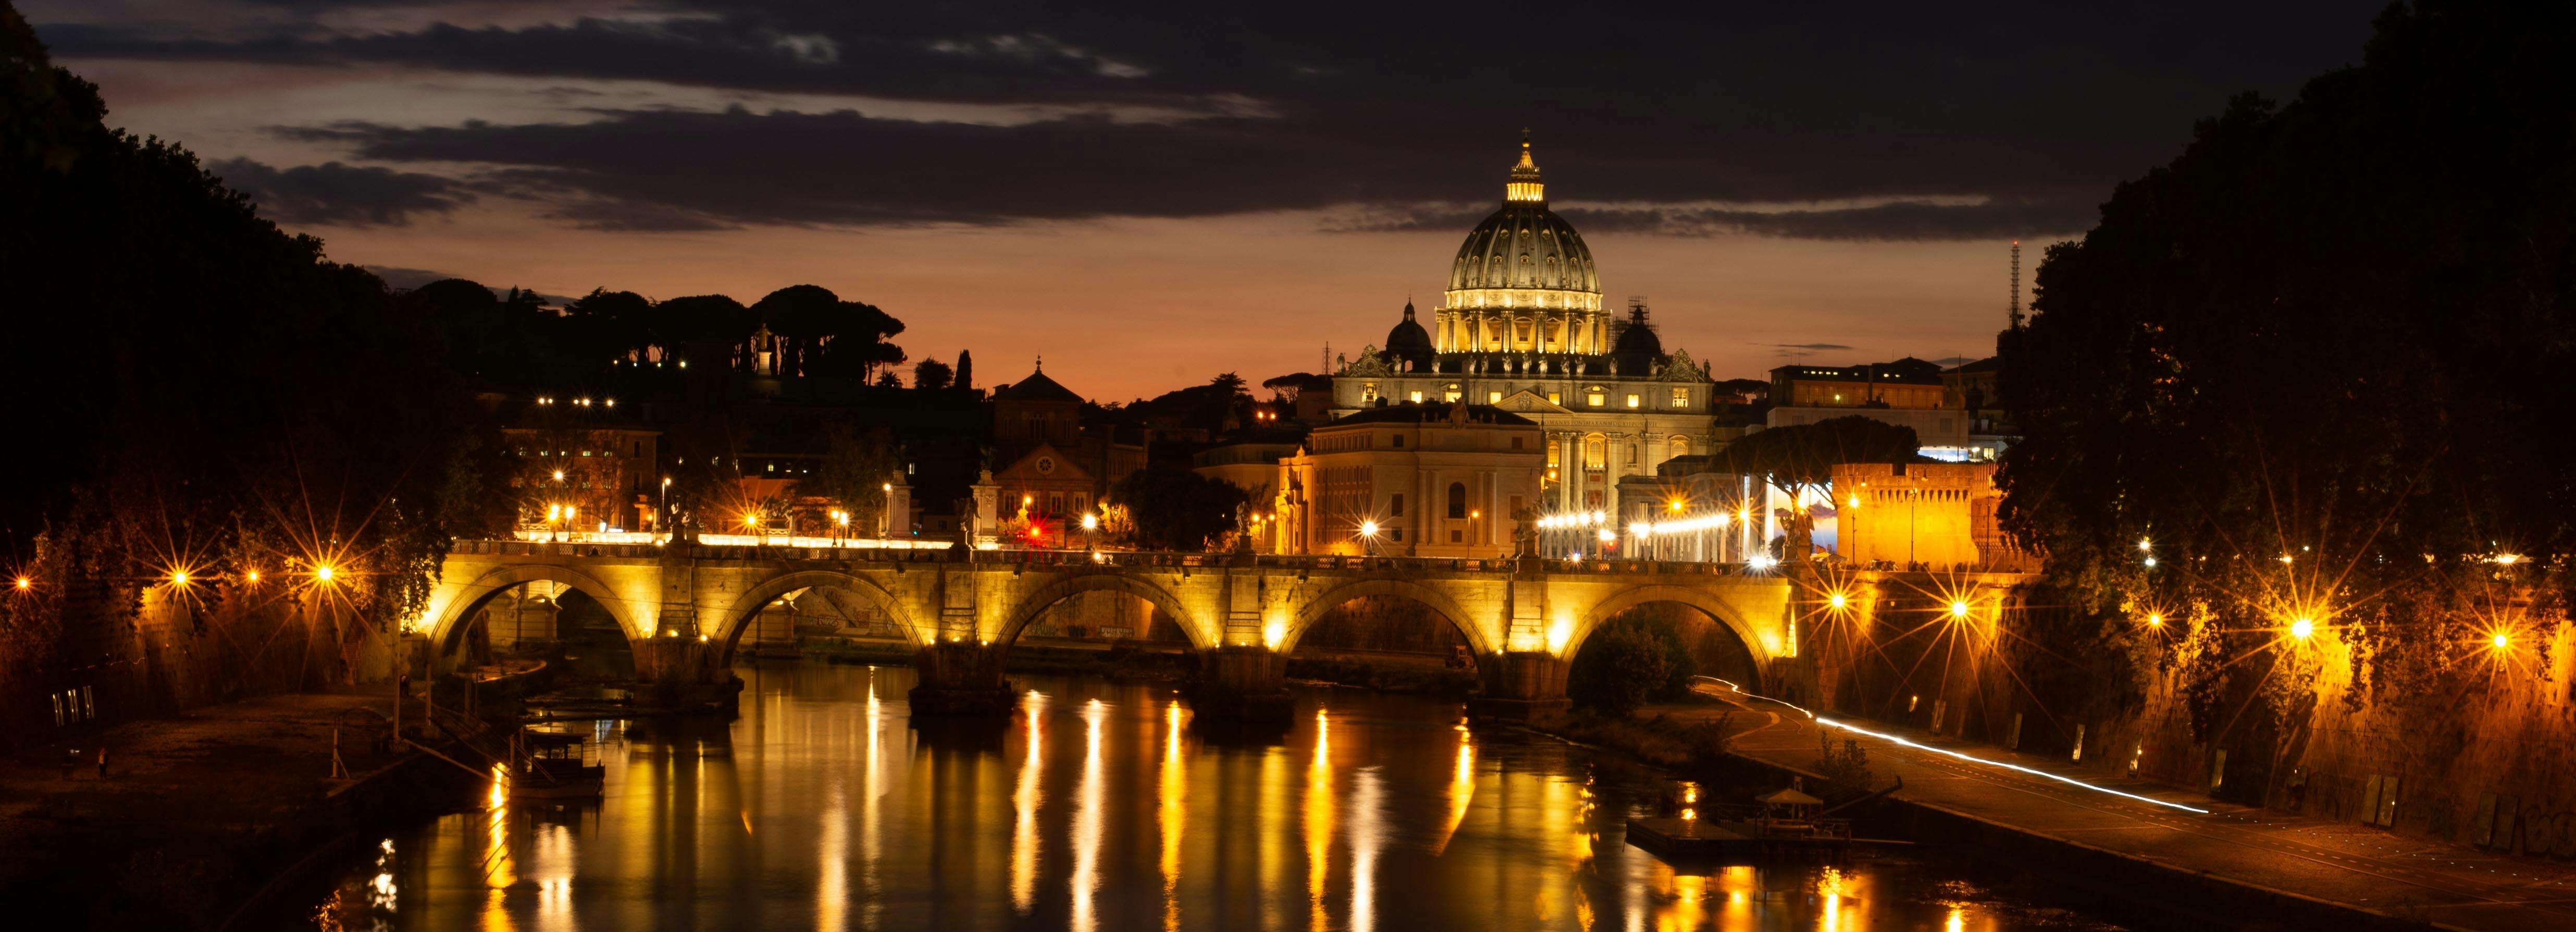 Privé-fototour door Rome bij nacht